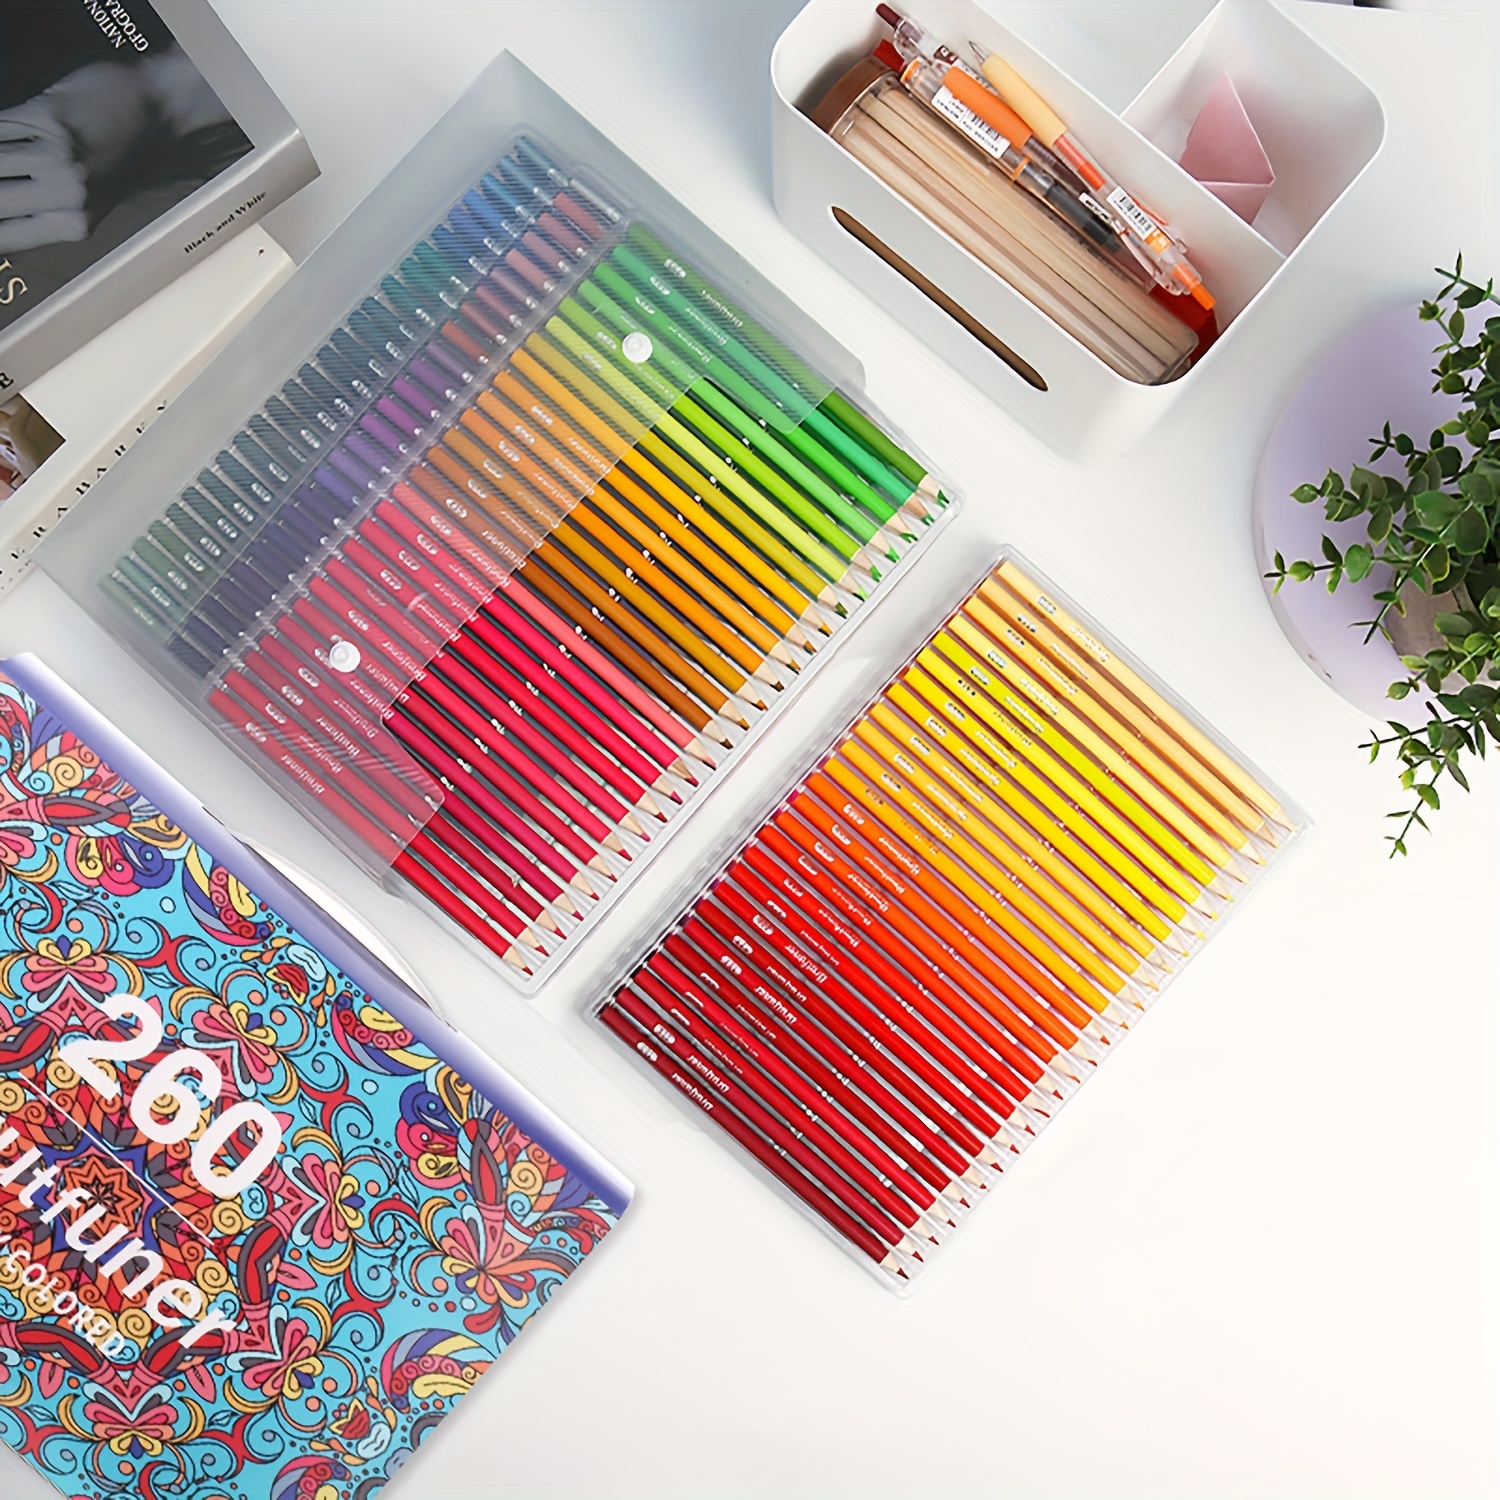 12 Colored Pencils - Premium Soft Core 12 Unique Colors No Duplicates Color  Pencil Set for Adult Coloring Books, Artist Drawing, Sketching, Crafting)